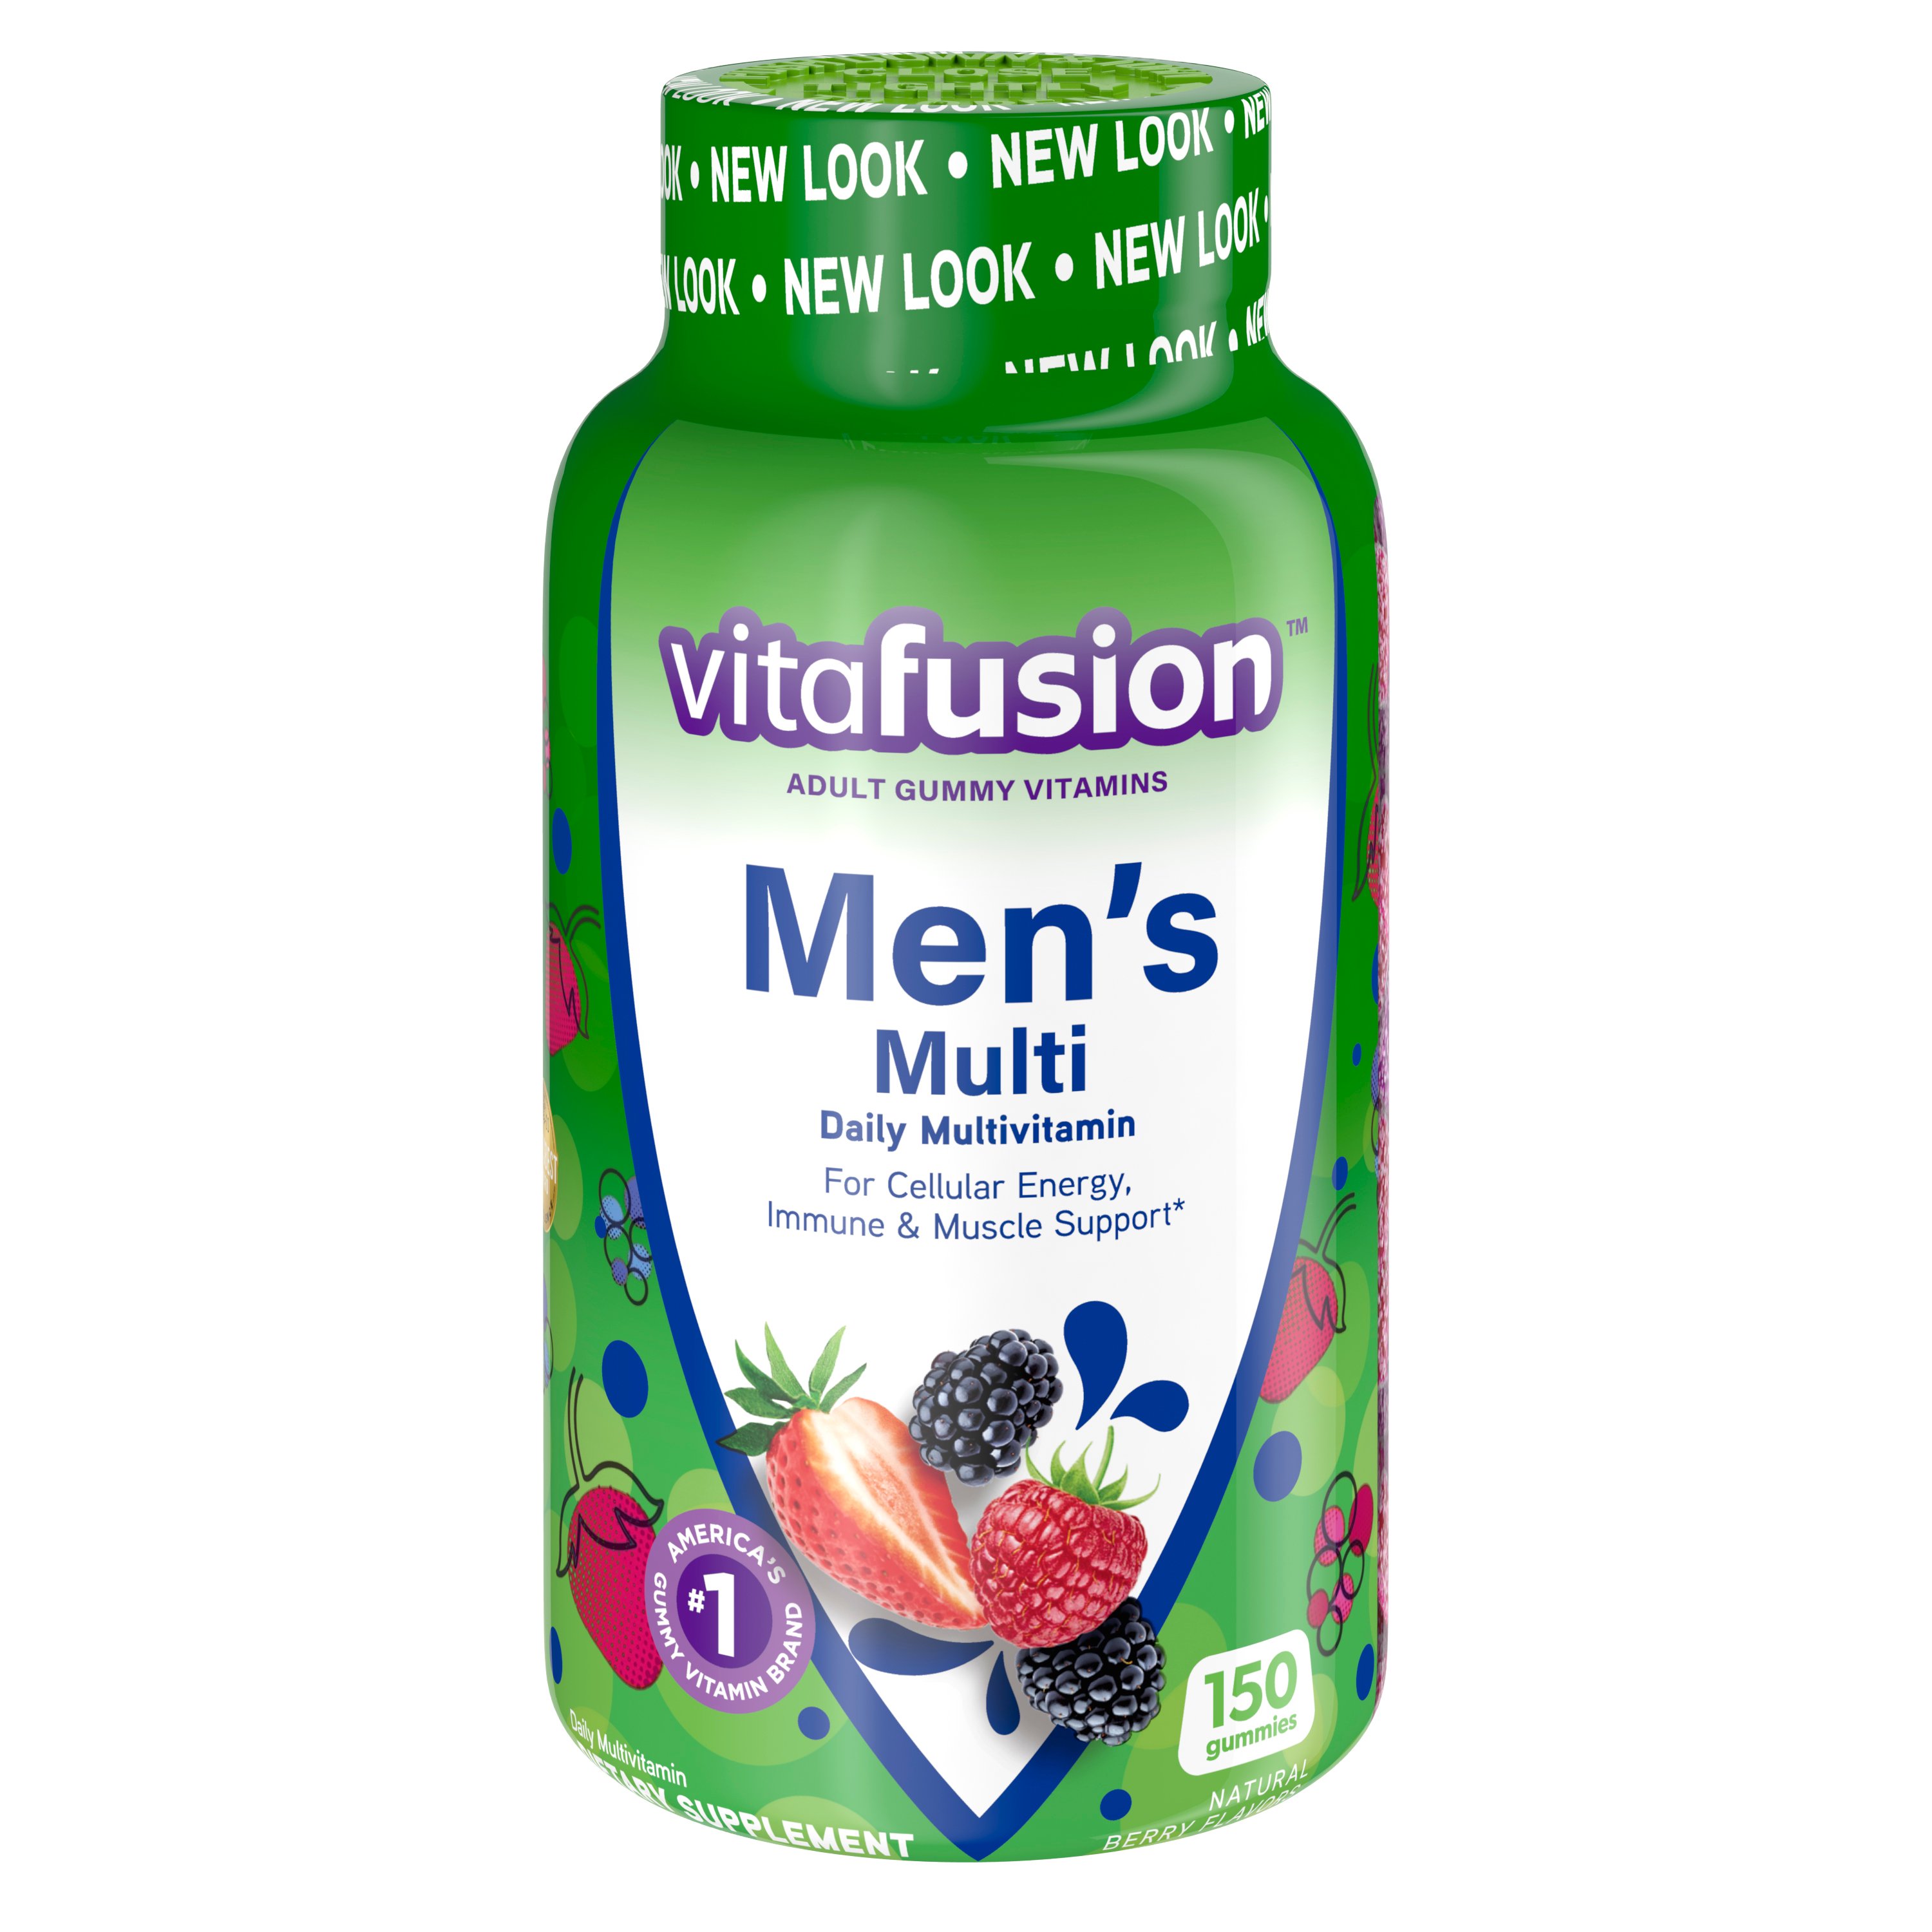 tsunami ziek Echter VitaFusion Men's Complete MultiViitamin Gummy Vitamins - Ass't Fruit  Flavors - Shop Vitamins & Supplements at H-E-B